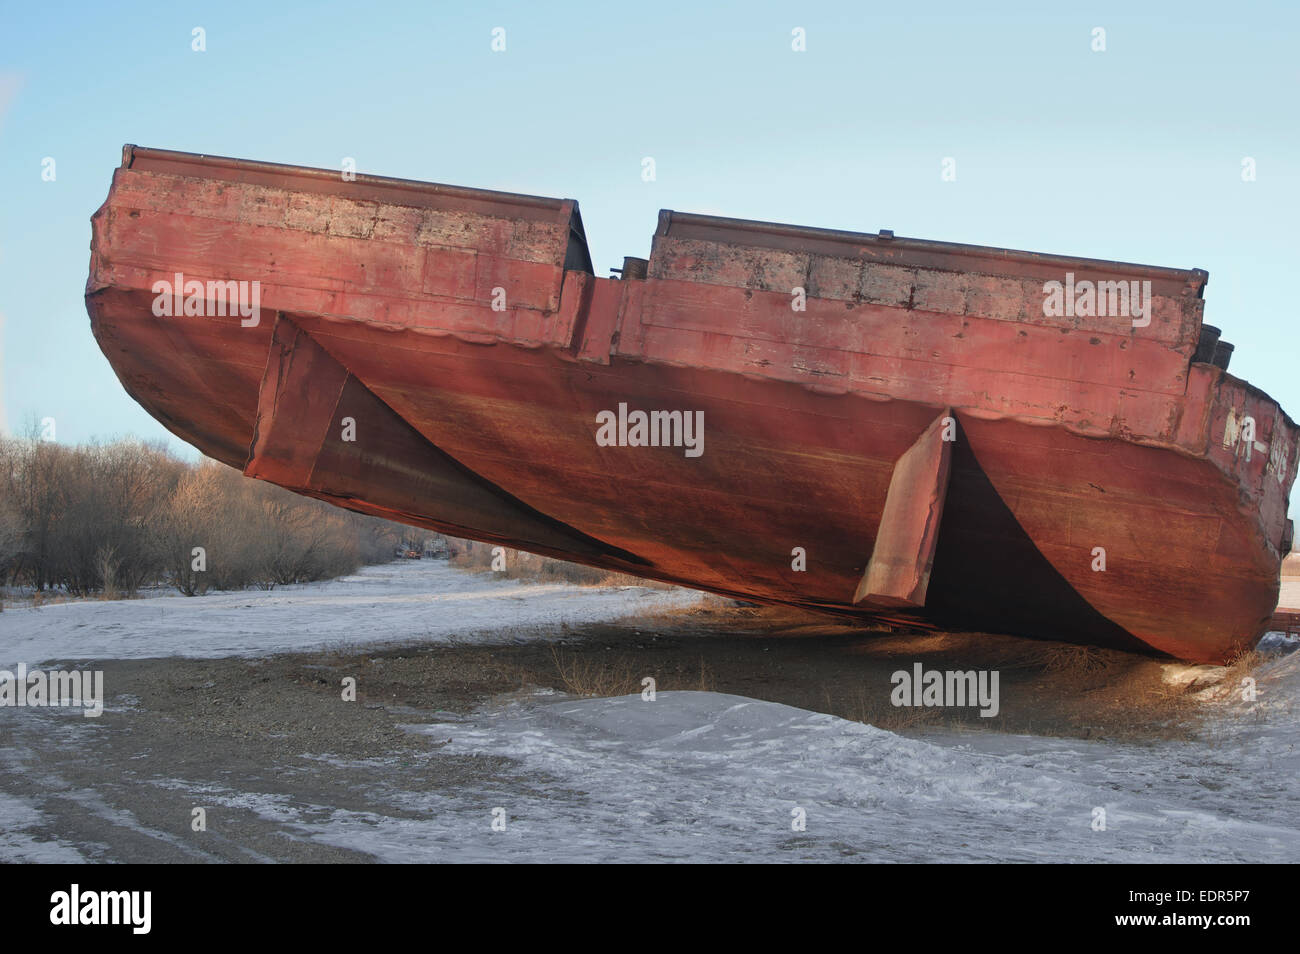 huge barge stranded at beach awaiting shipment of scrap metal Stock Photo